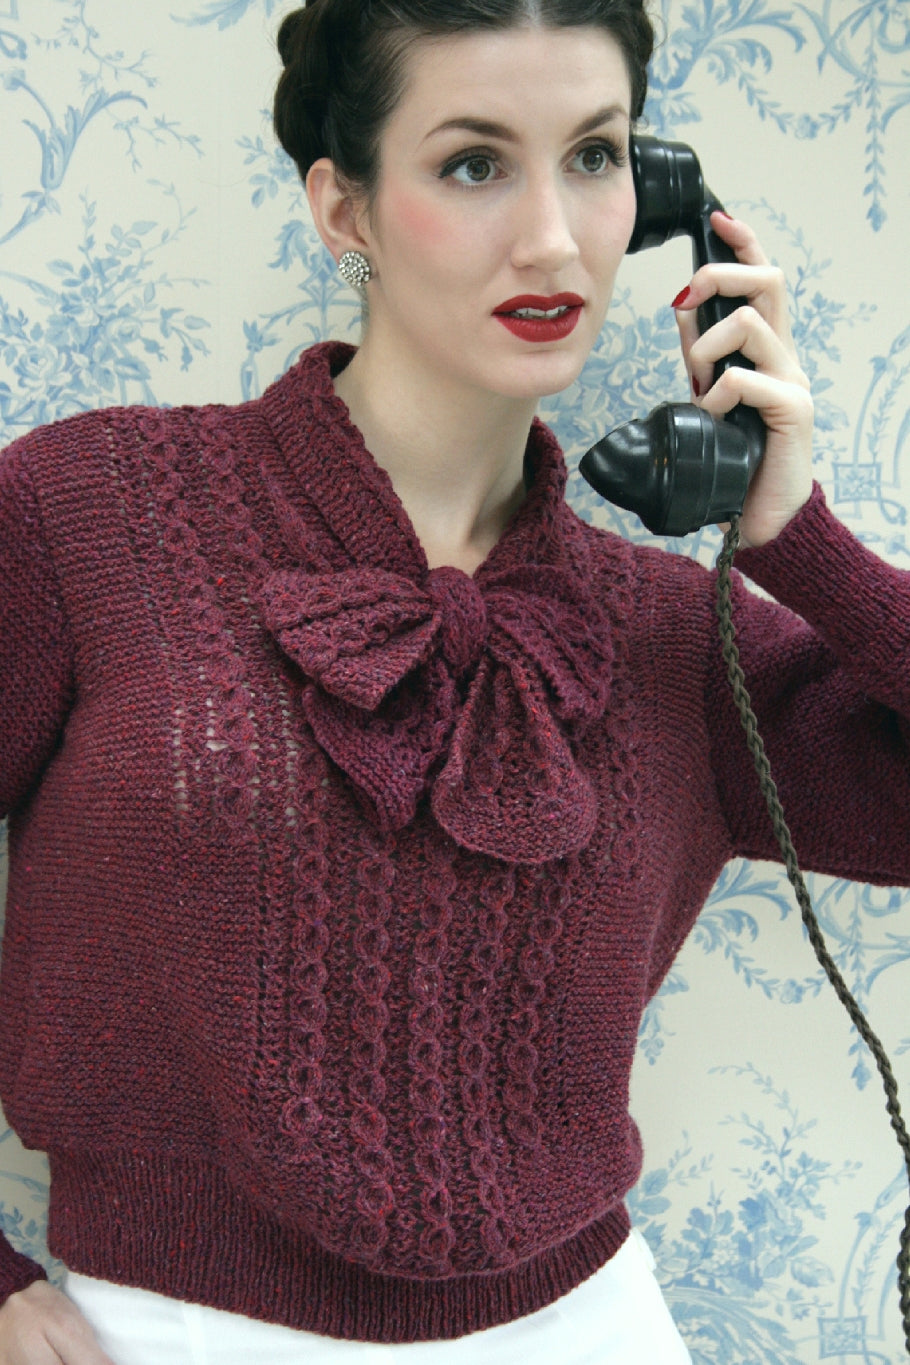 A Stitch in Time Vintage Knitting & Crochet Patterns, 1920-1949